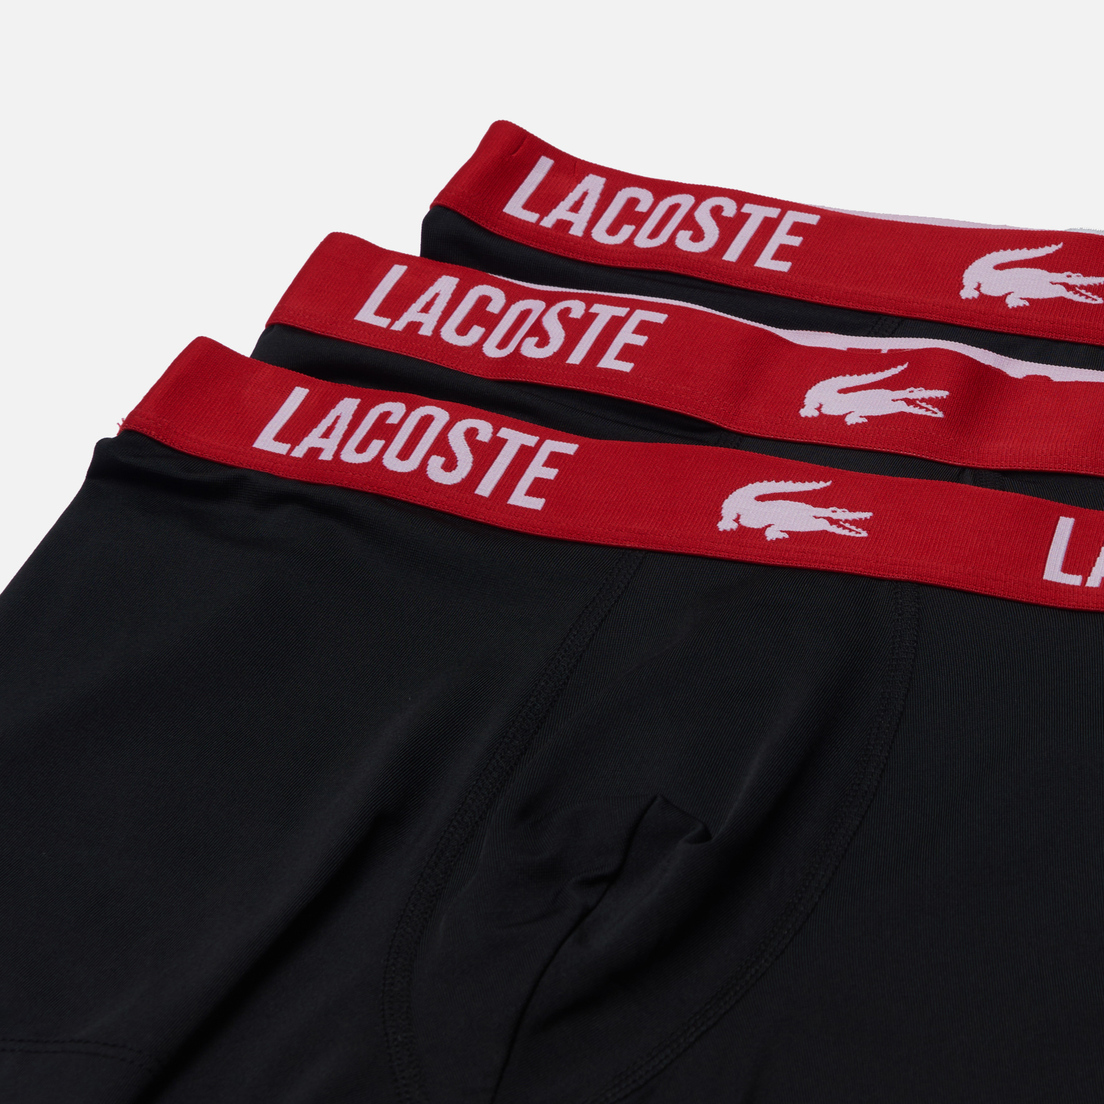 Lacoste Underwear Комплект мужских трусов 3-Pack Microfiber Boxer Brief